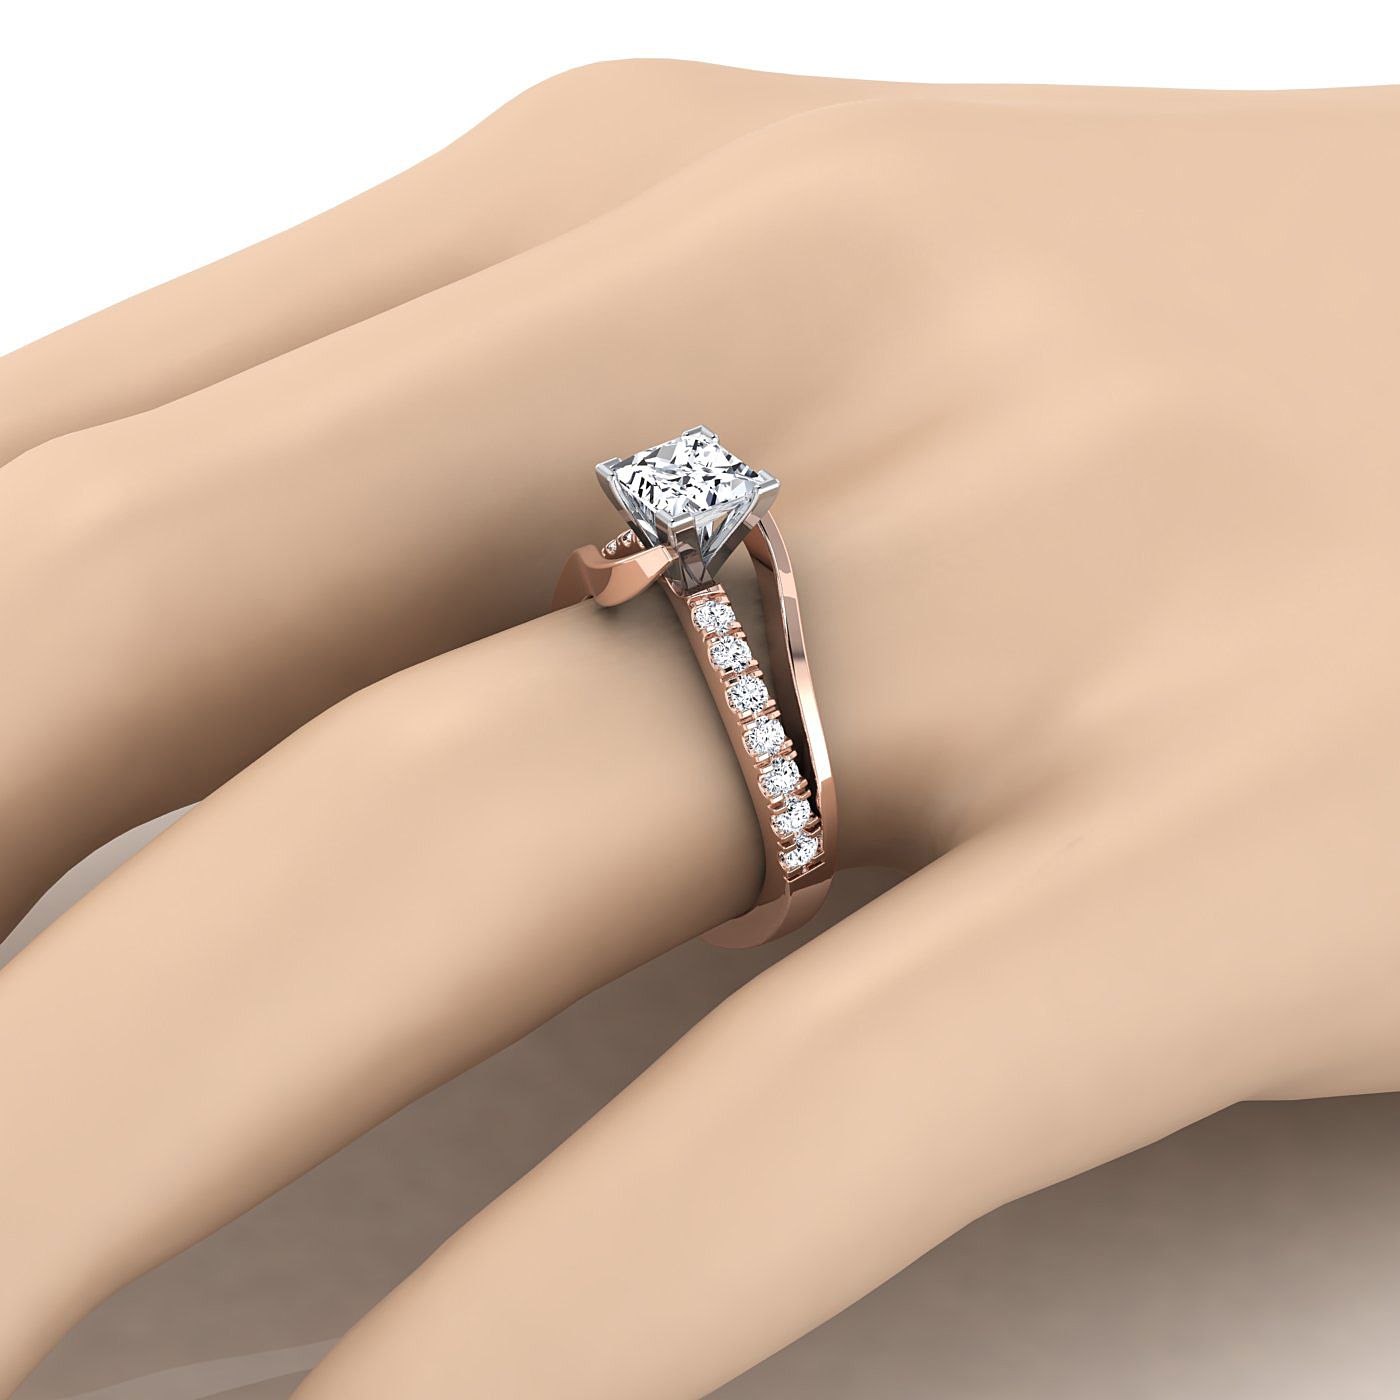 14K Rose Gold Princess Cut Unique Bypass Diamond Pave Swirl Engagement Ring -3/8ctw